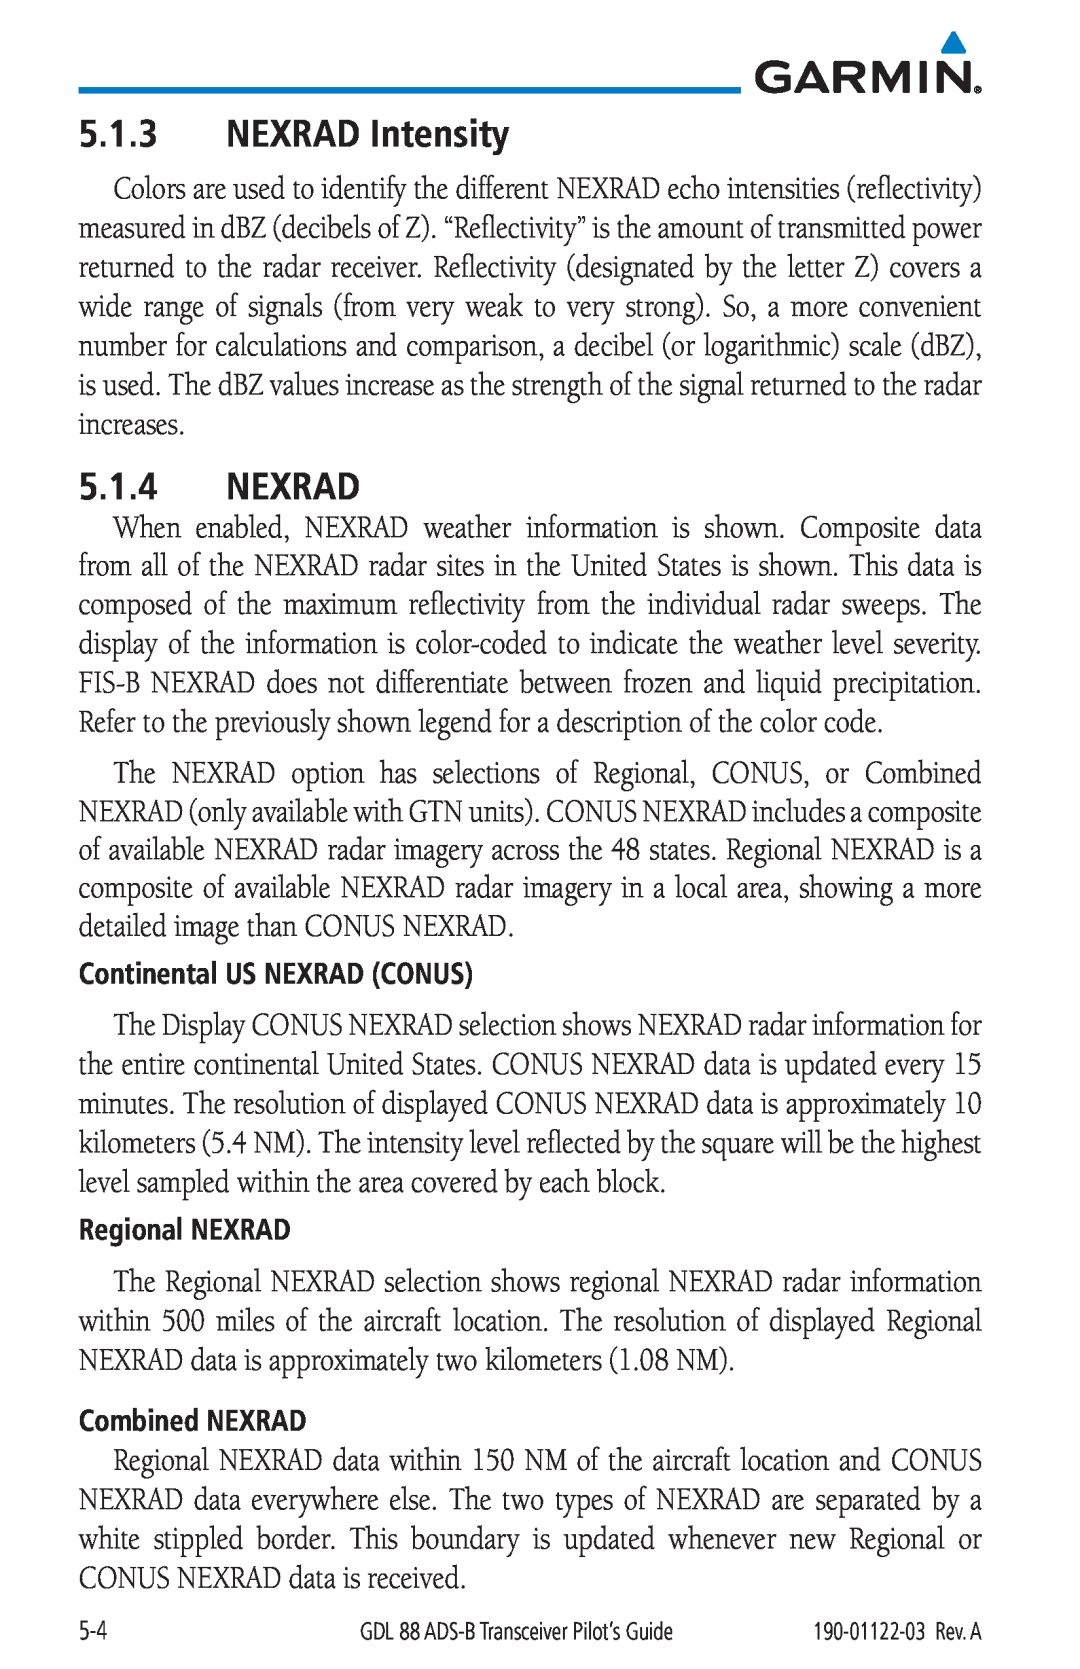 Garmin GDL 88 manual NEXRAD Intensity, Nexrad, Continental US NEXRAD CONUS, Regional NEXRAD, Combined NEXRAD 